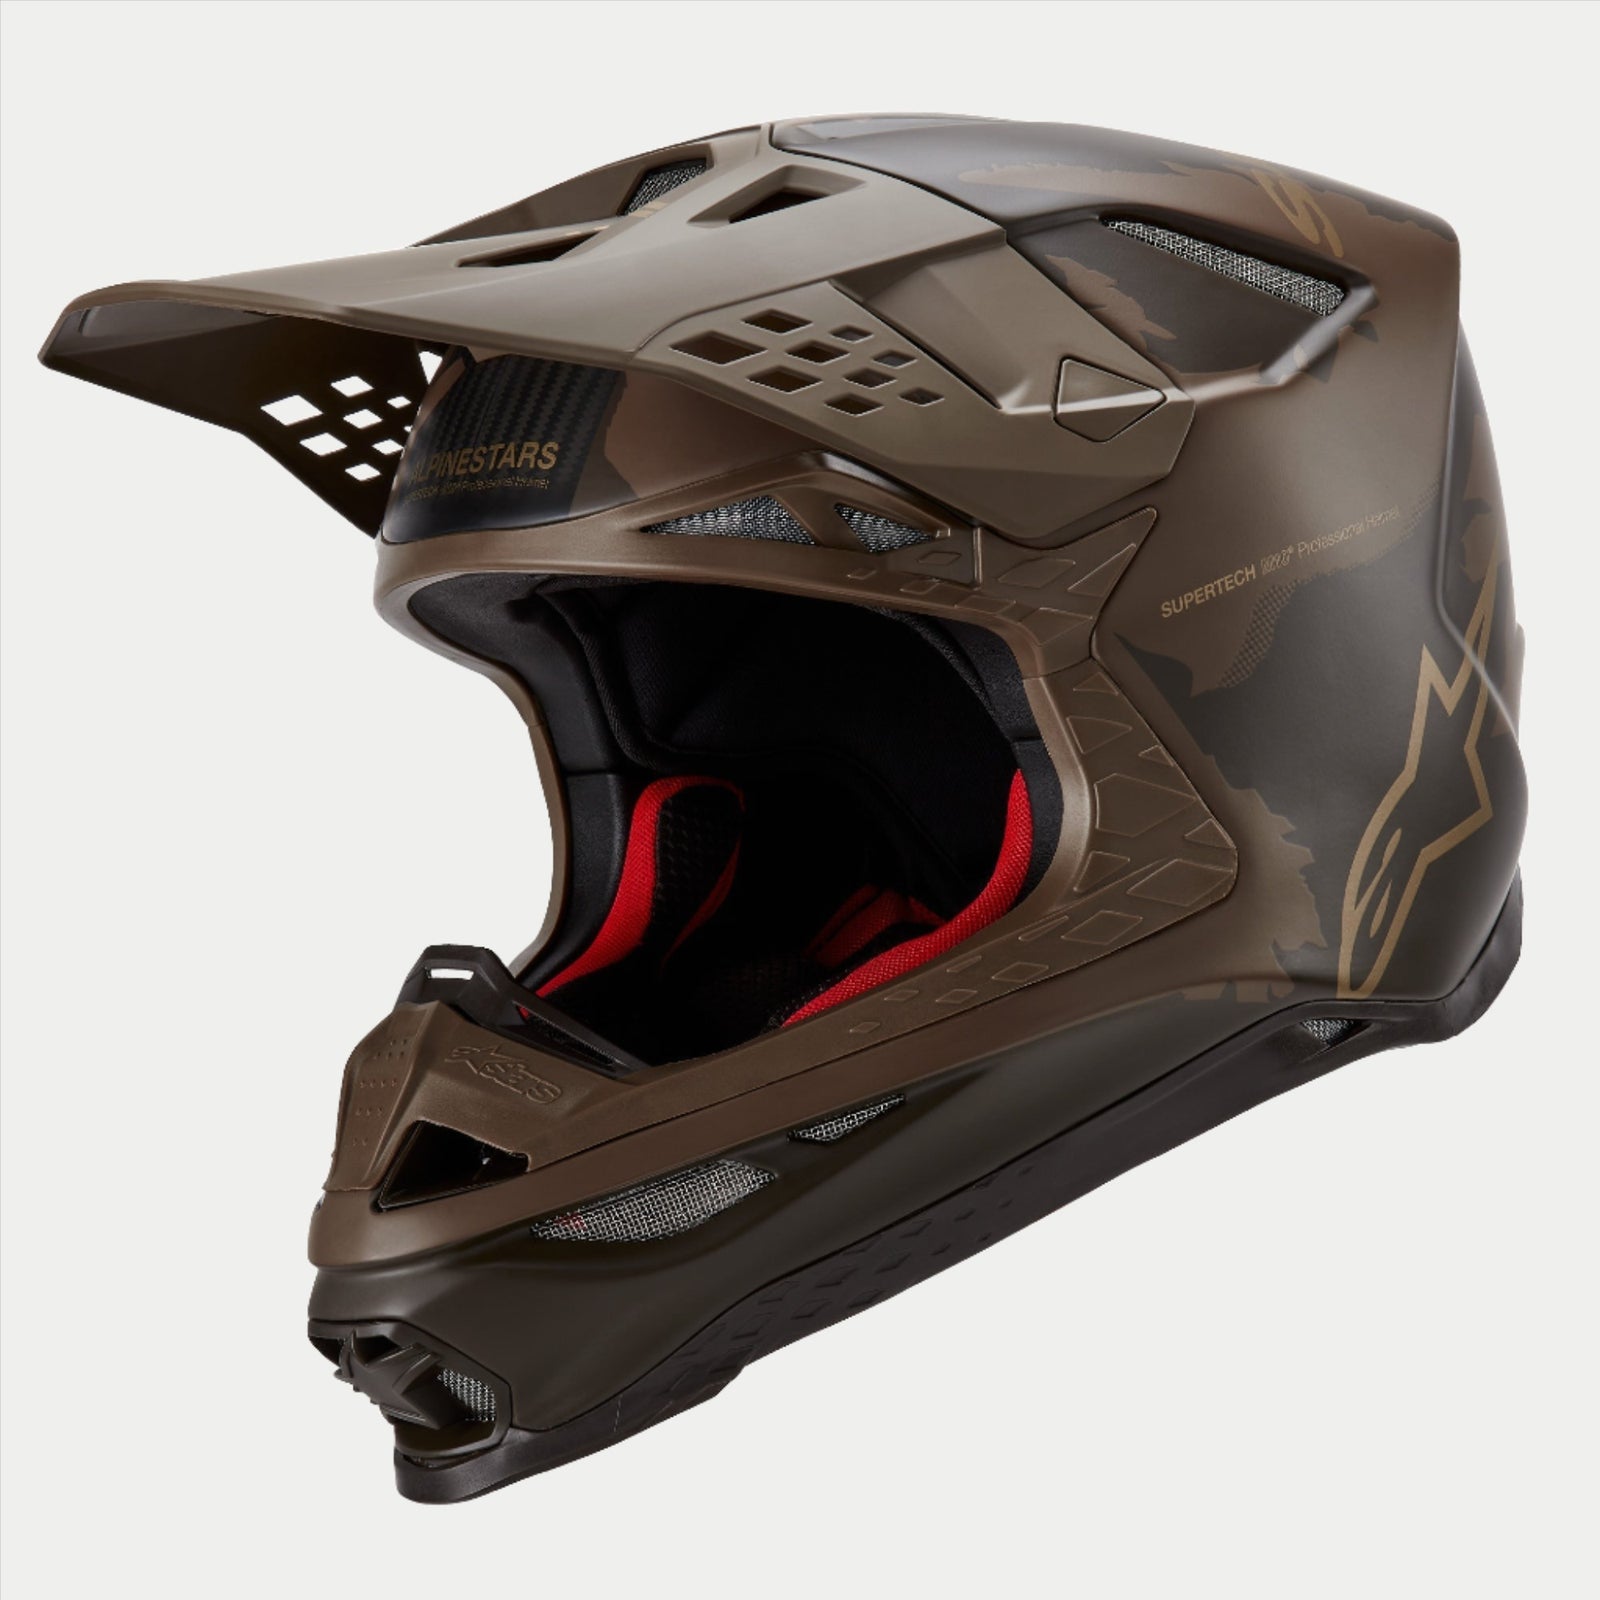 Limited Edition Supertech M10 Squad 23 Helmet